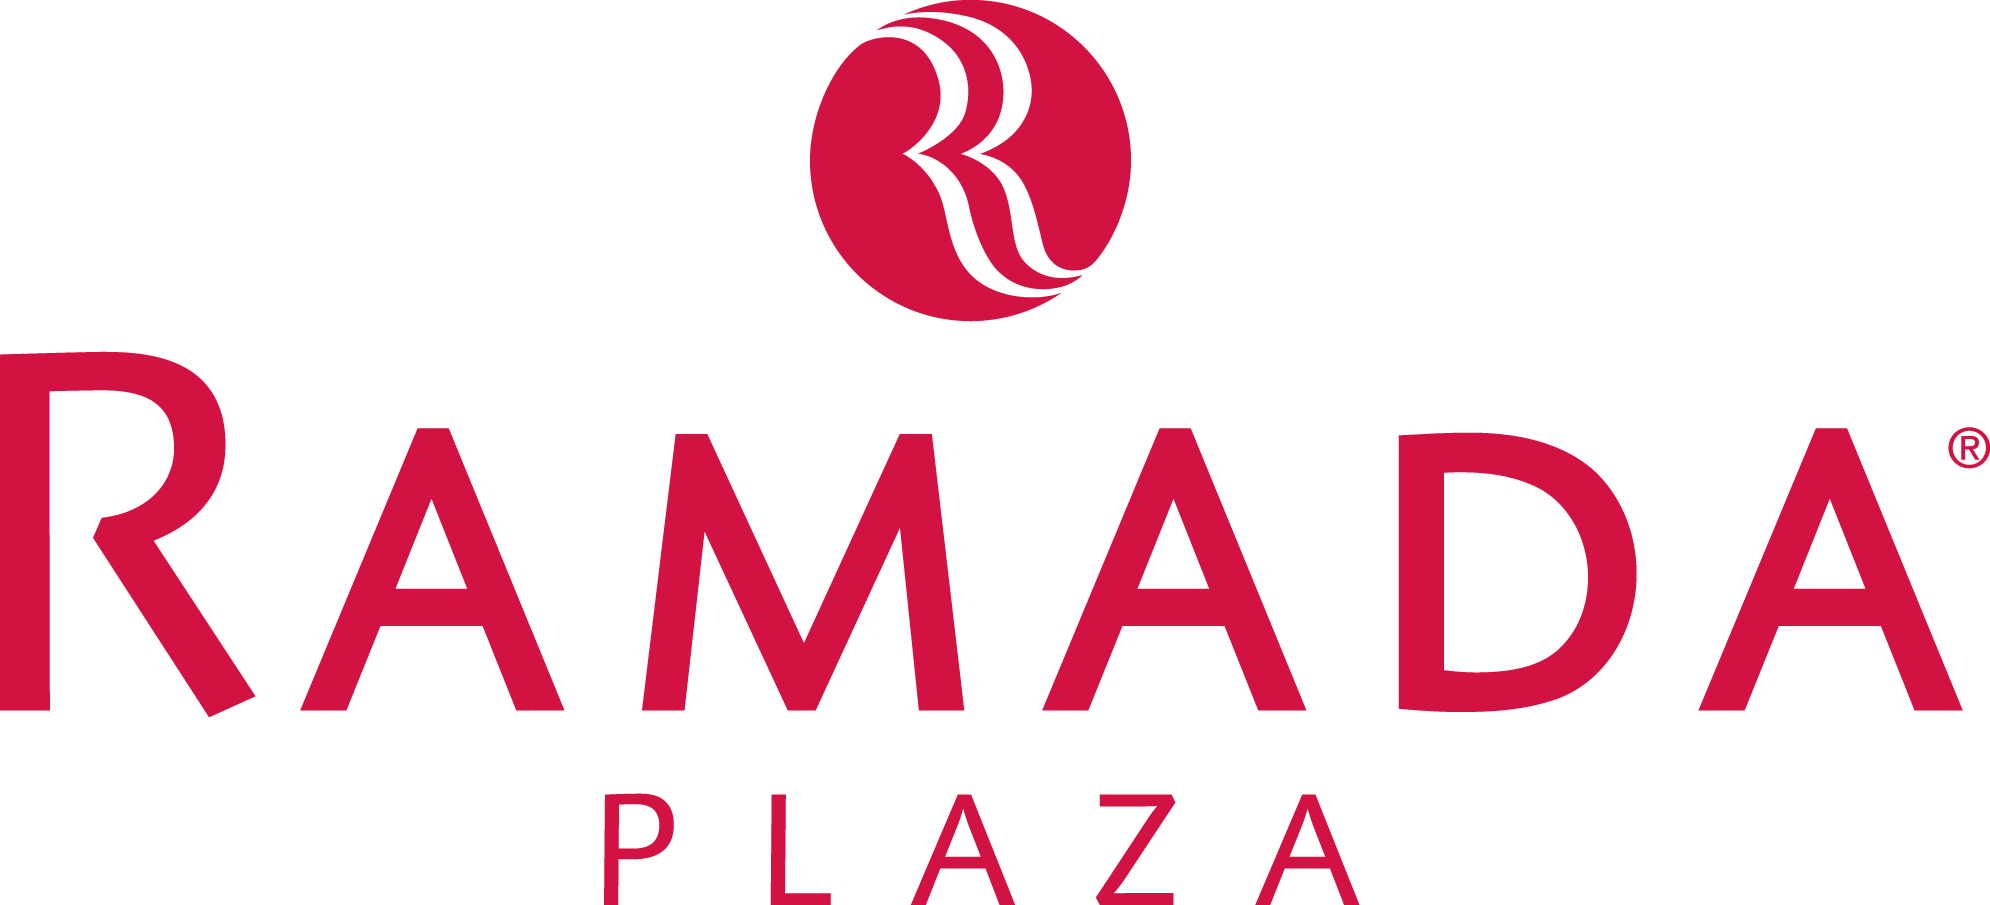  / Ramada Plaza